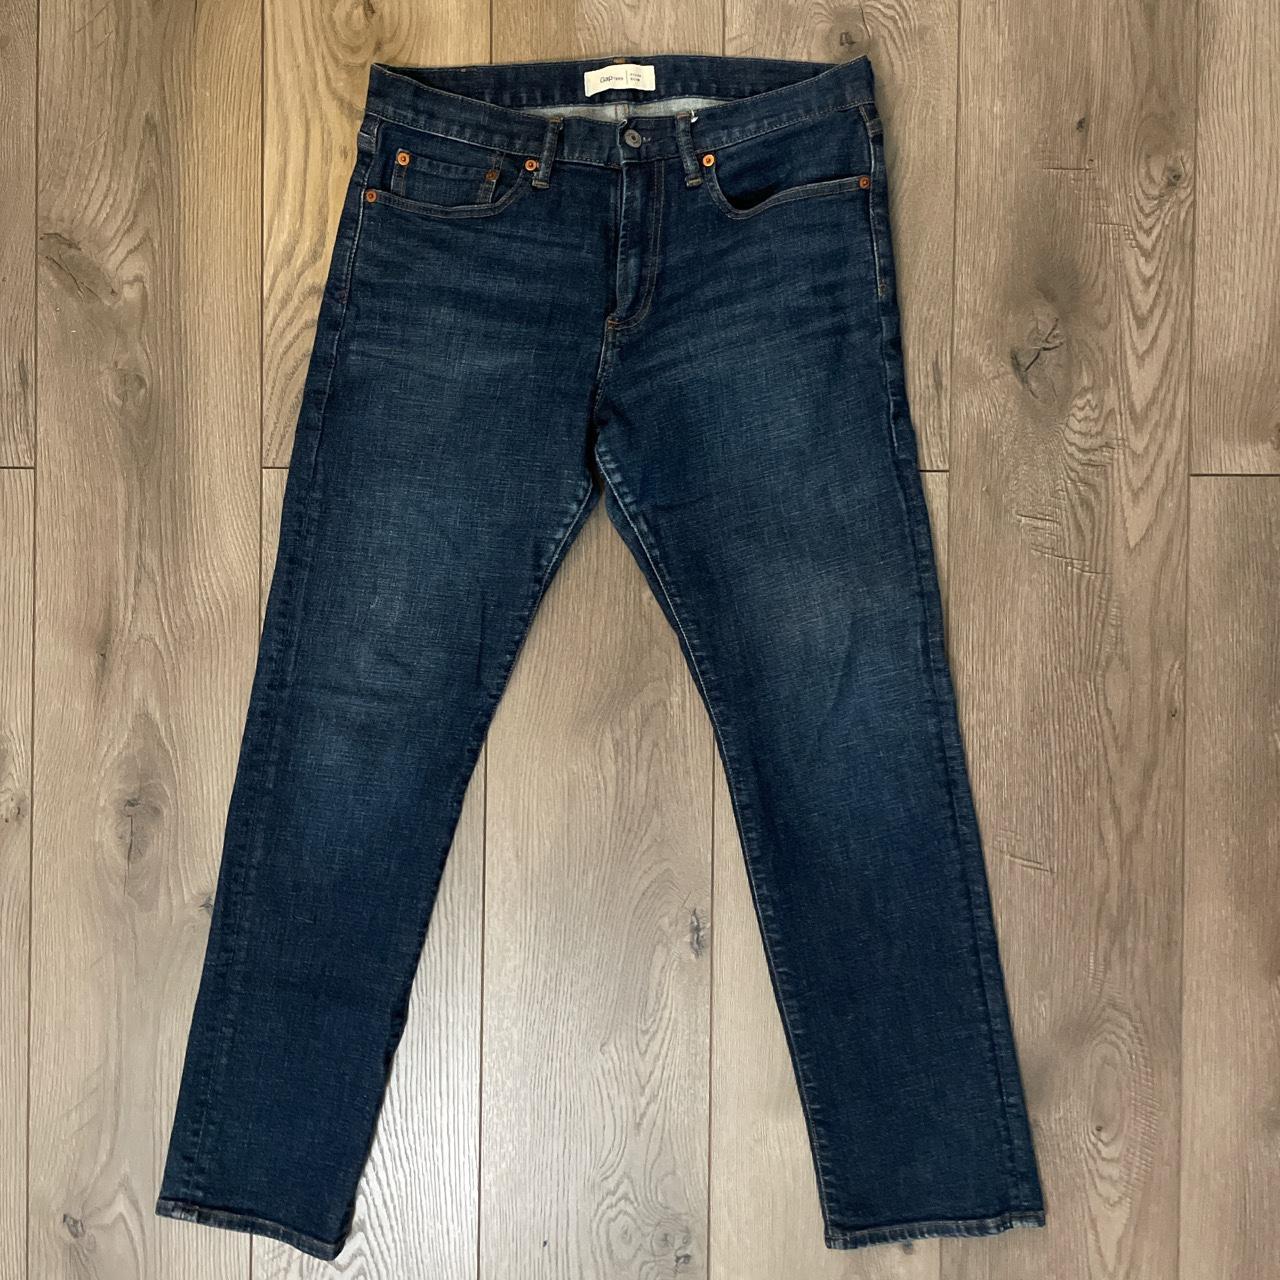 Mens Gap blue jeans slim fit 31x30 - Depop